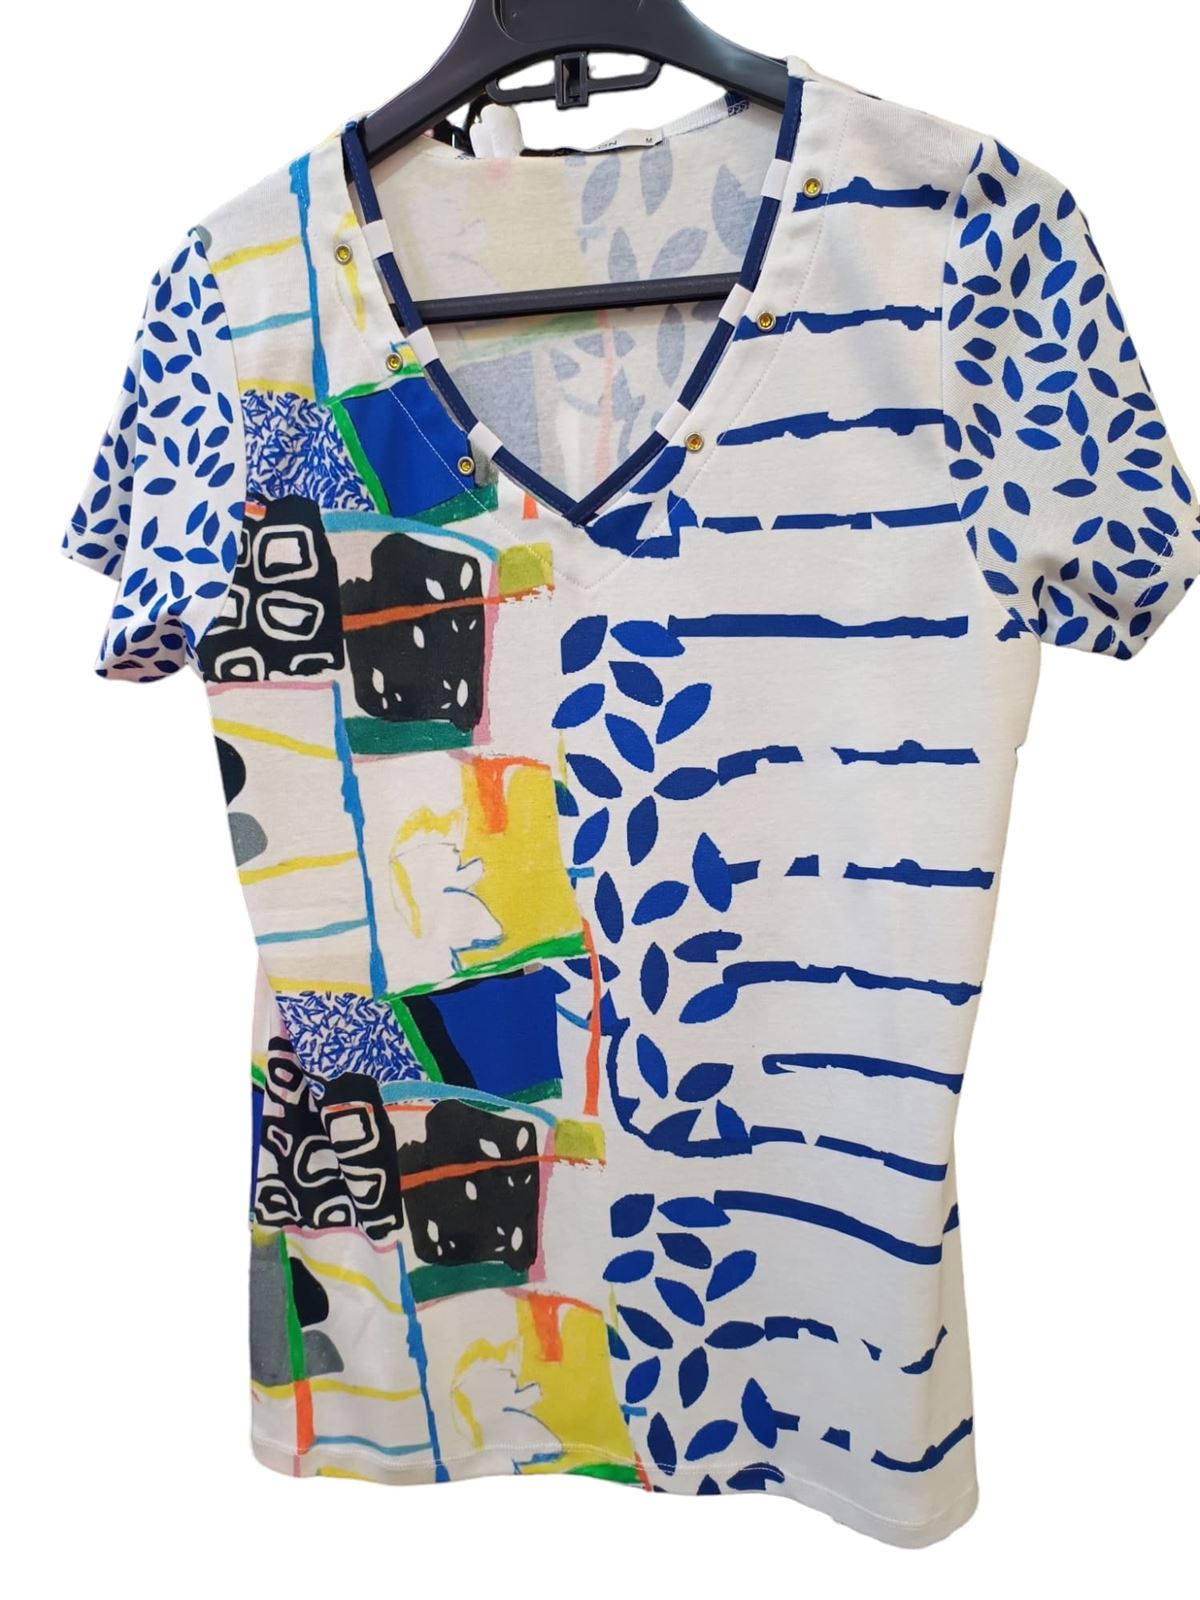 Camiseta original pico tonos azules con tachuelas - Imagen 4